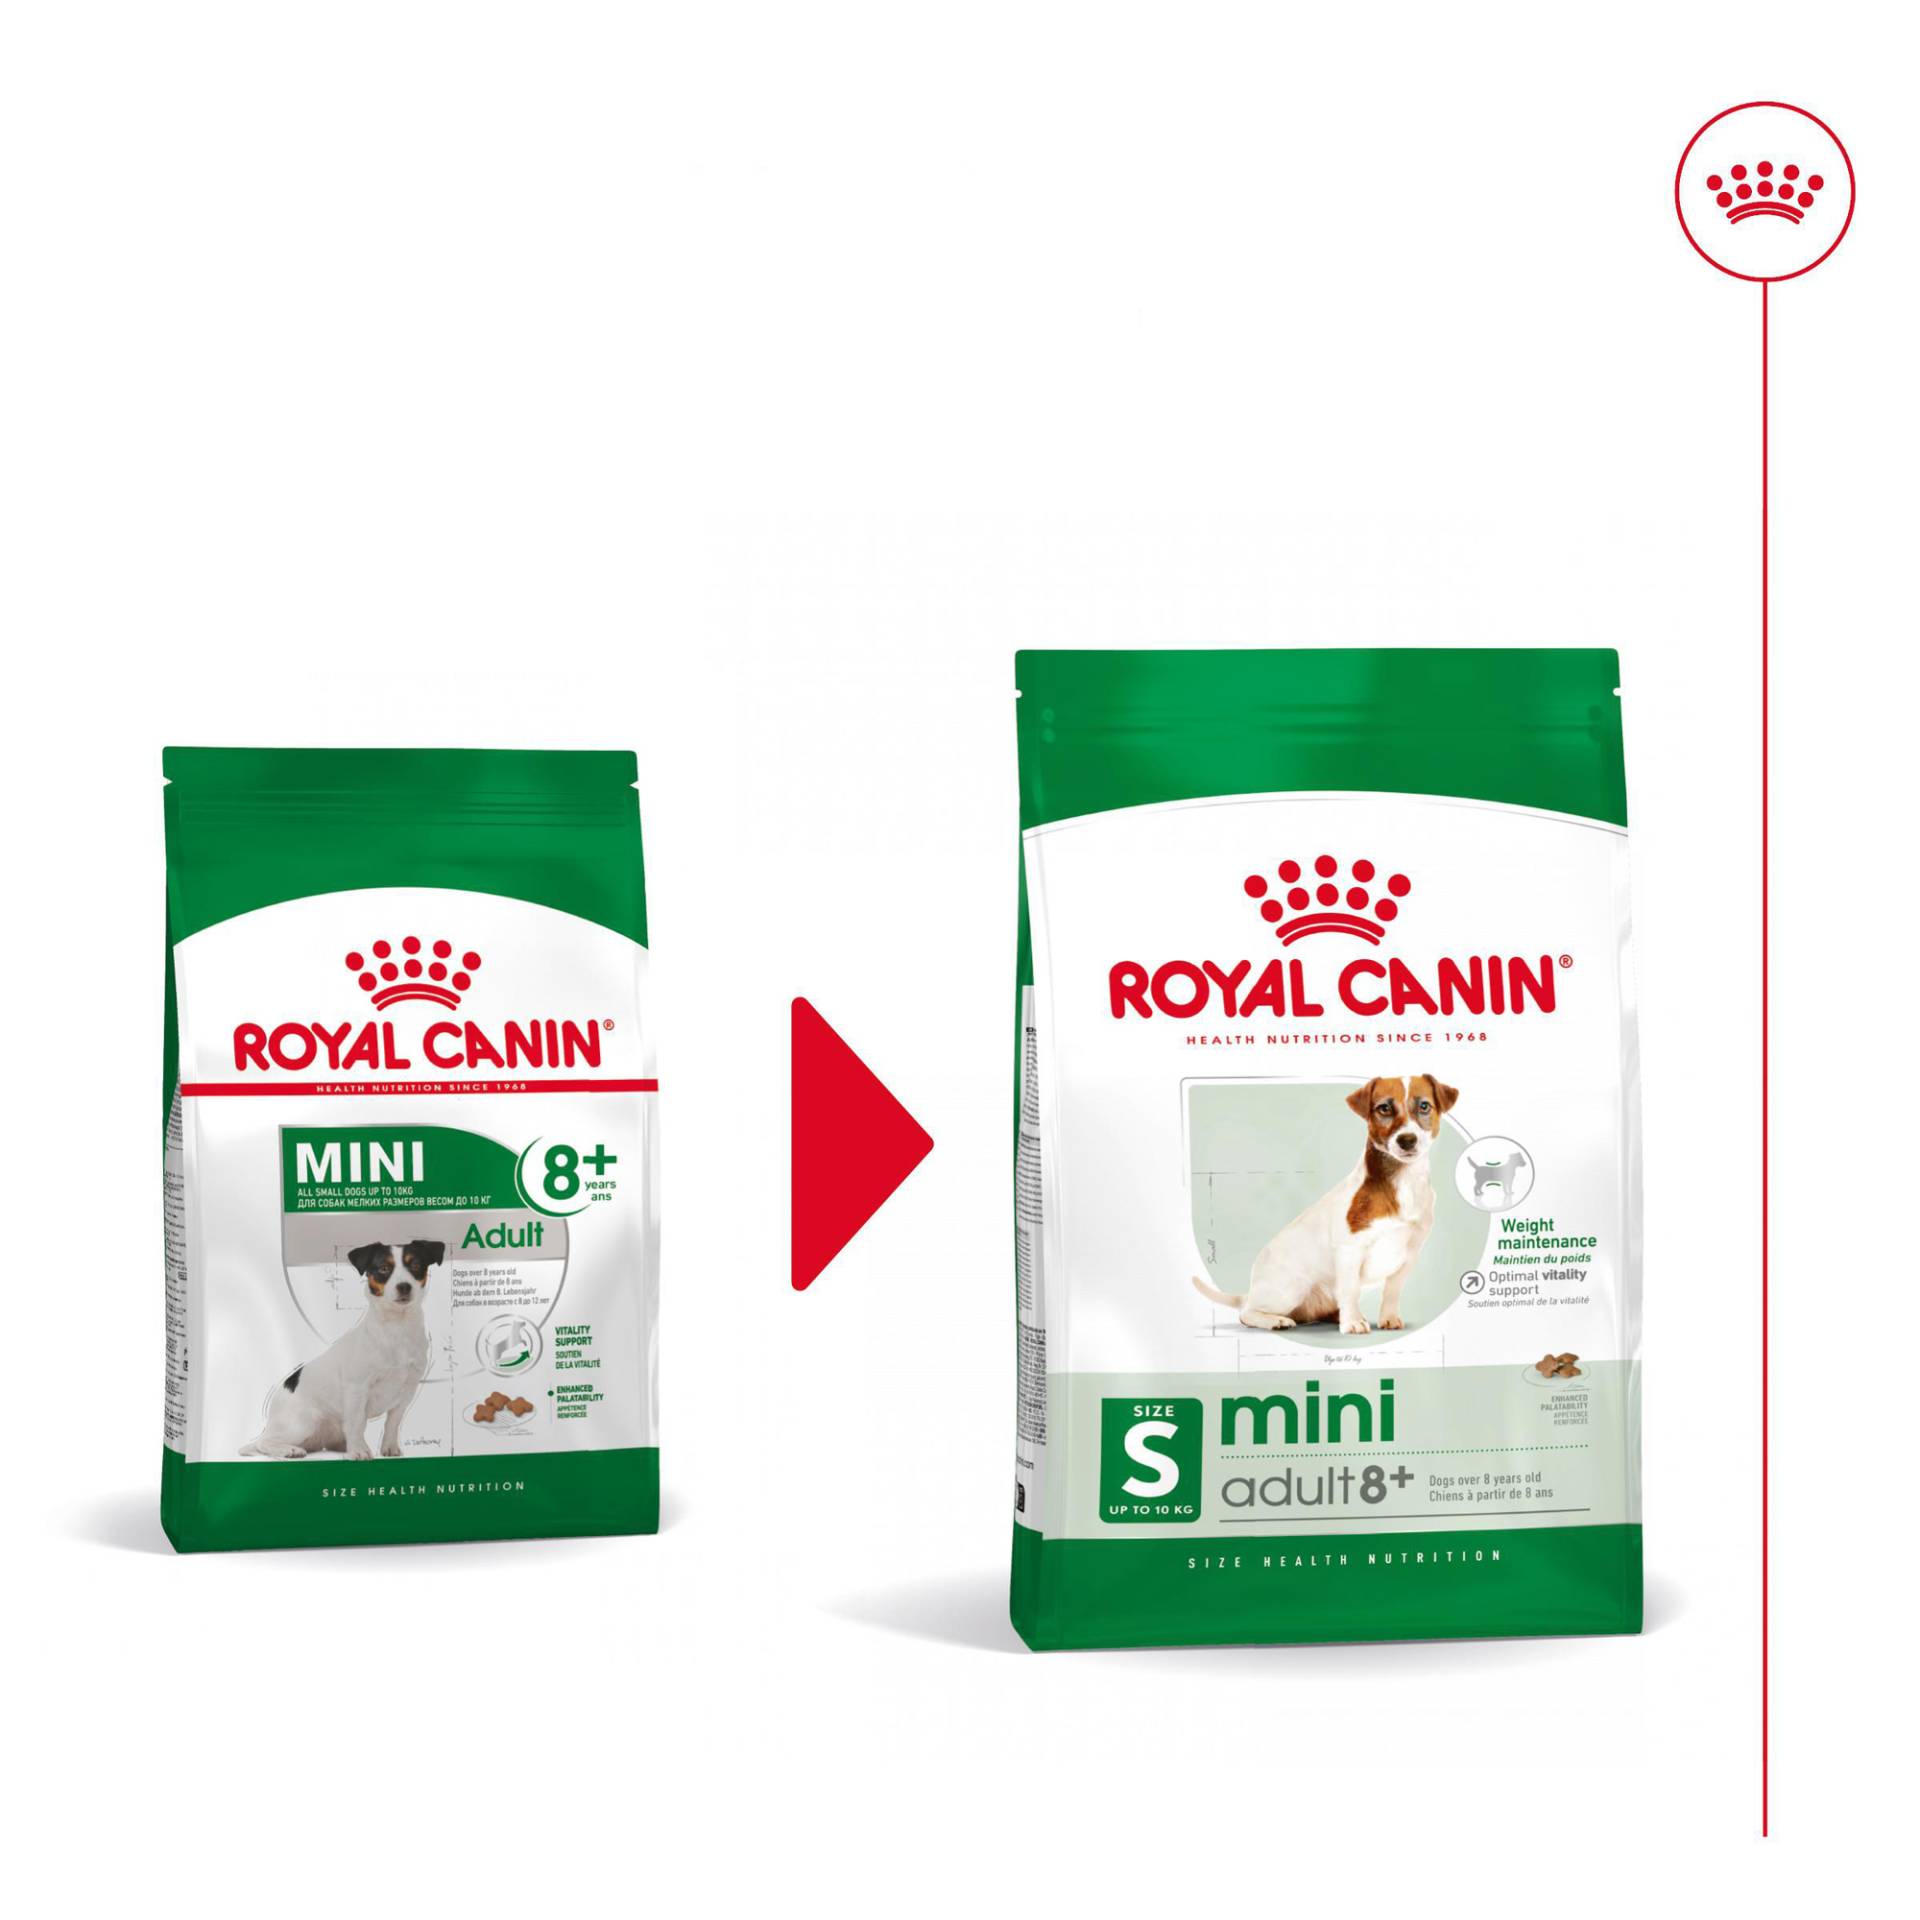 Royal Canin Mini Adult 8+ - 8 kg von Royal Canin